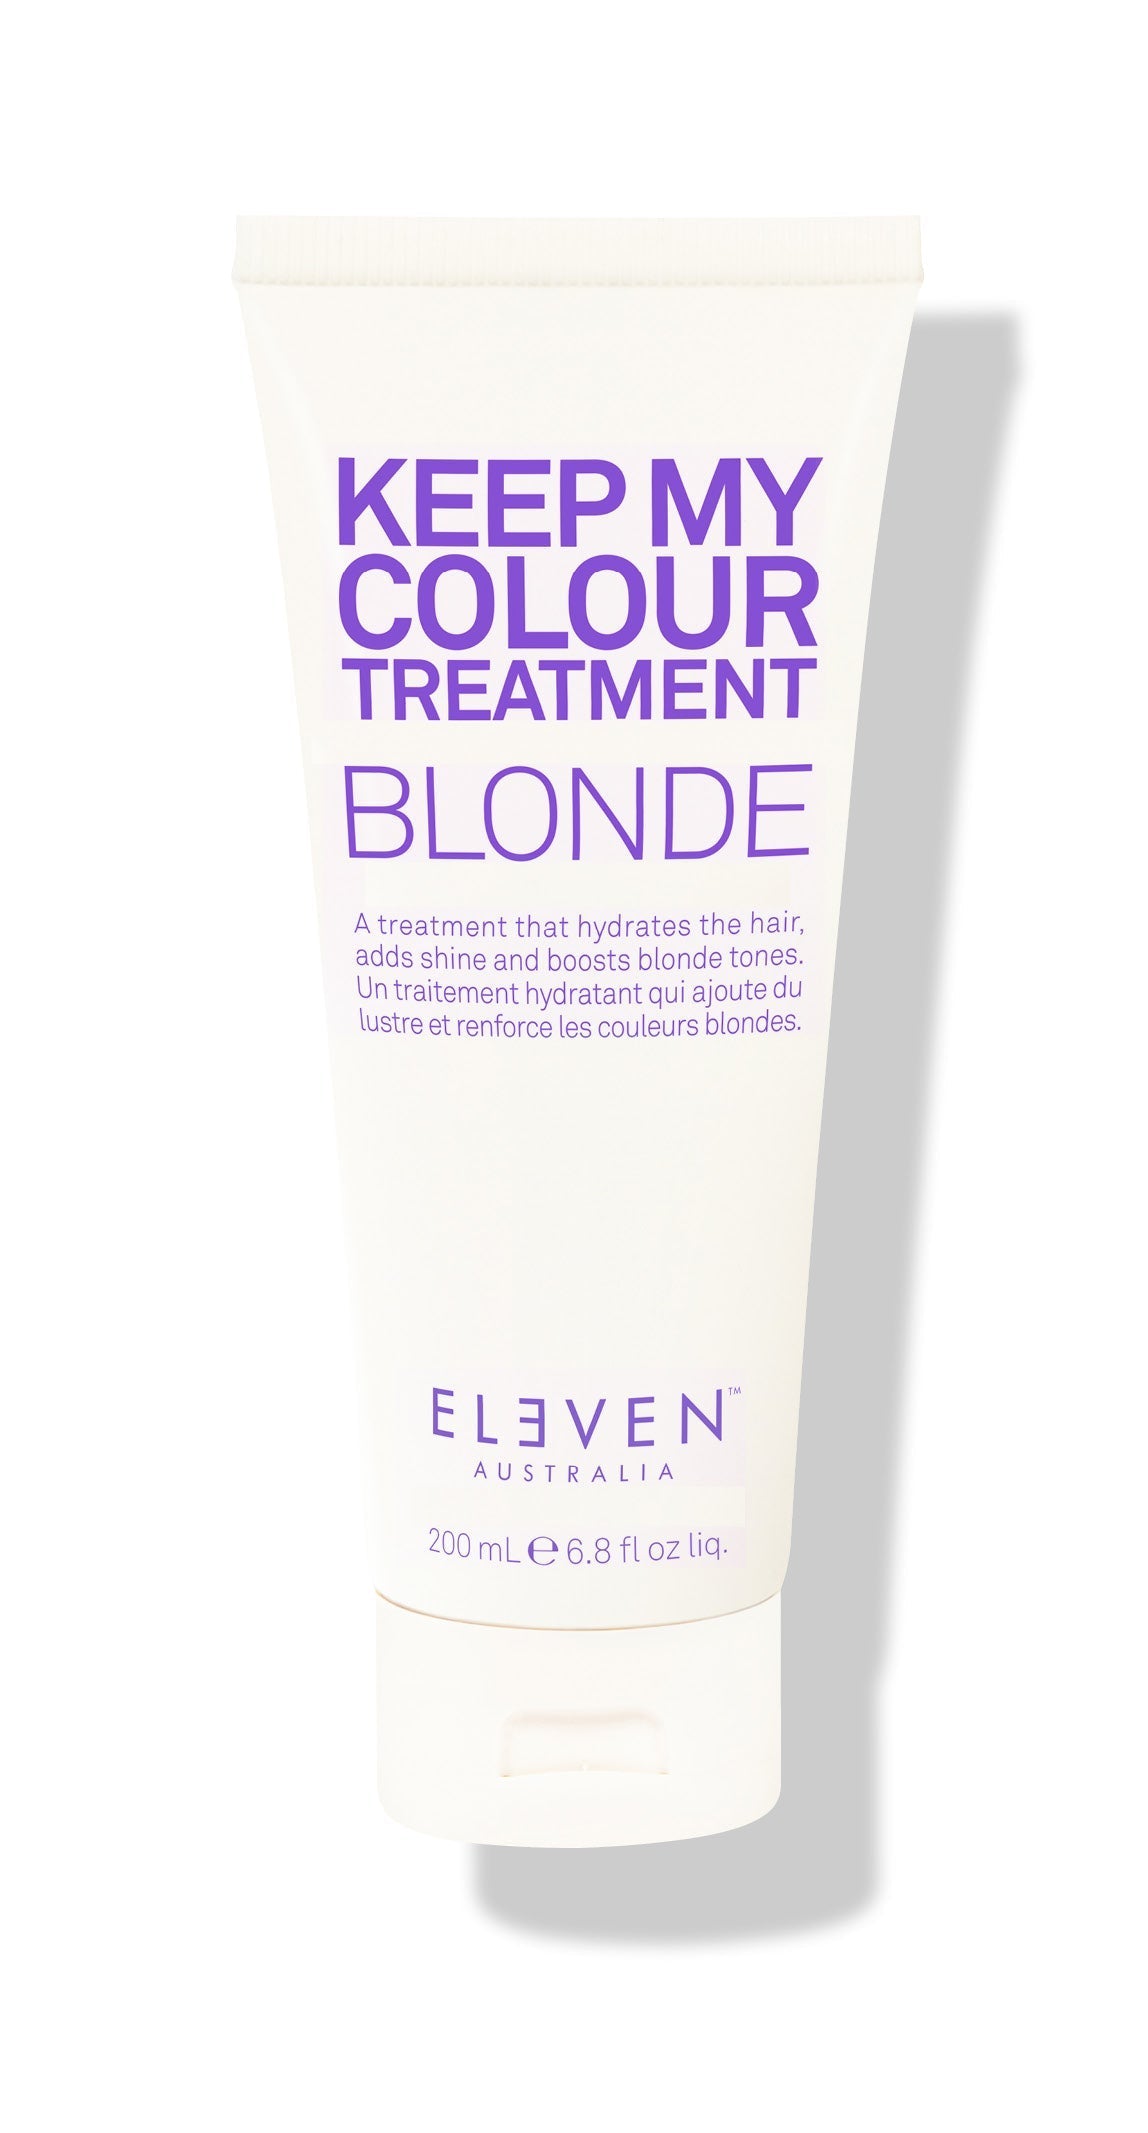 Keep My Colour Treatment Blonde - 200ml - ELEVEN Australia